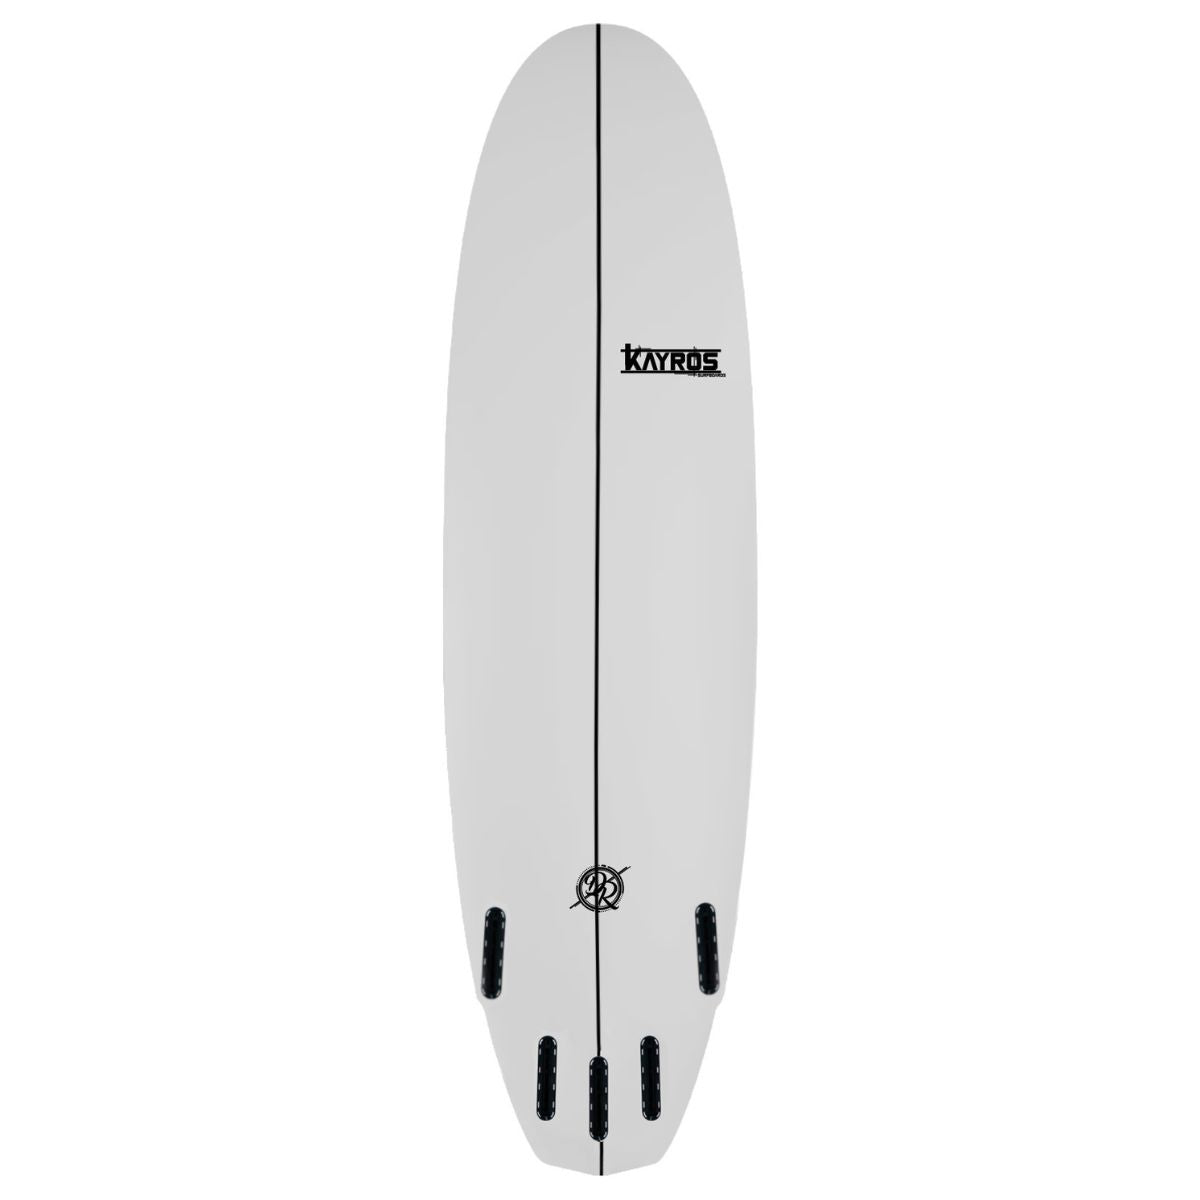 Winger | Kayros Surfboards